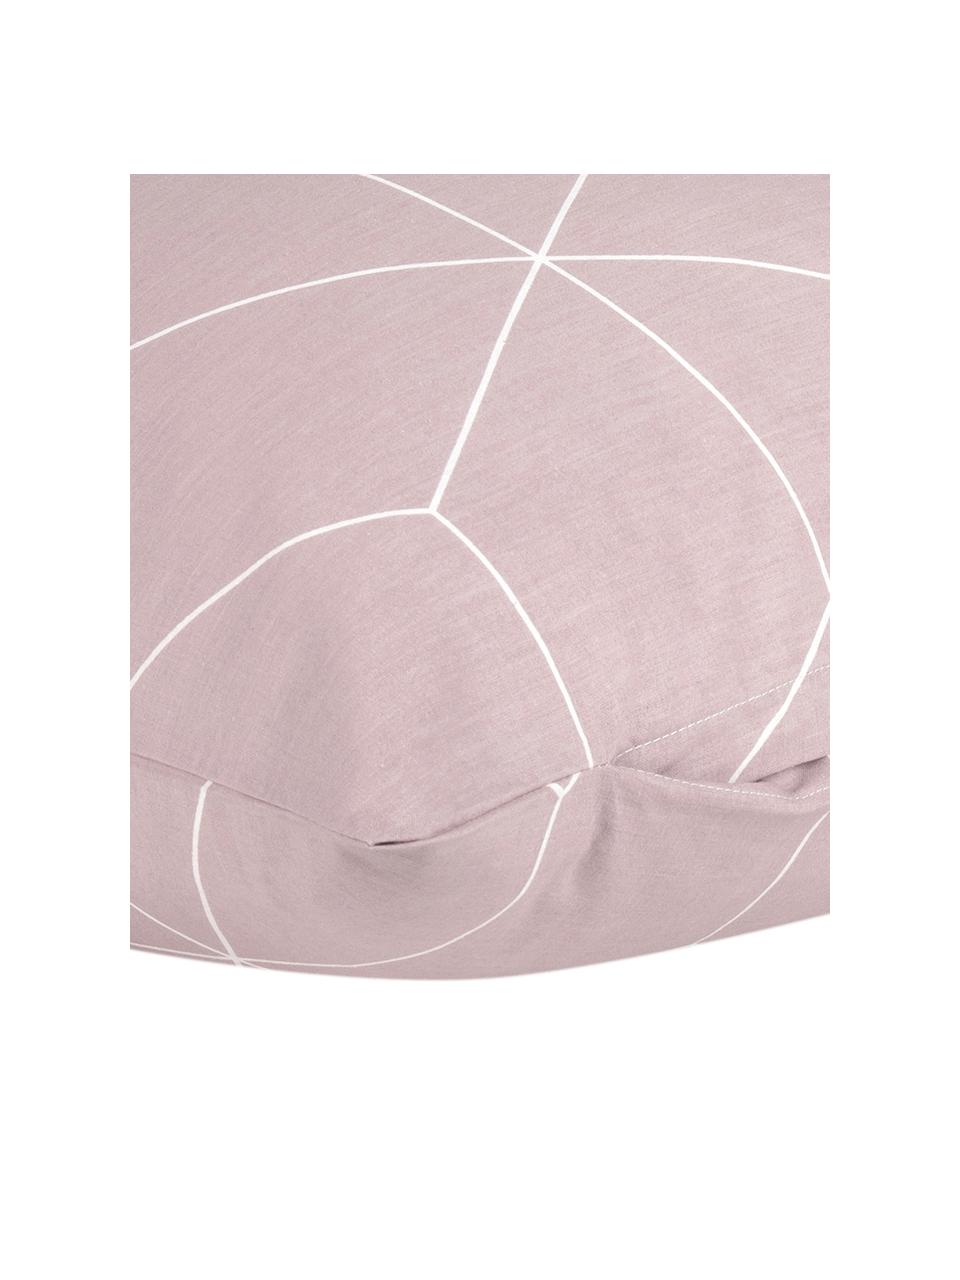 Funda de almohada de algodón Lynn, 50 x 70 cm, Rosa palo, blanco crema, An 50 x L 70 cm